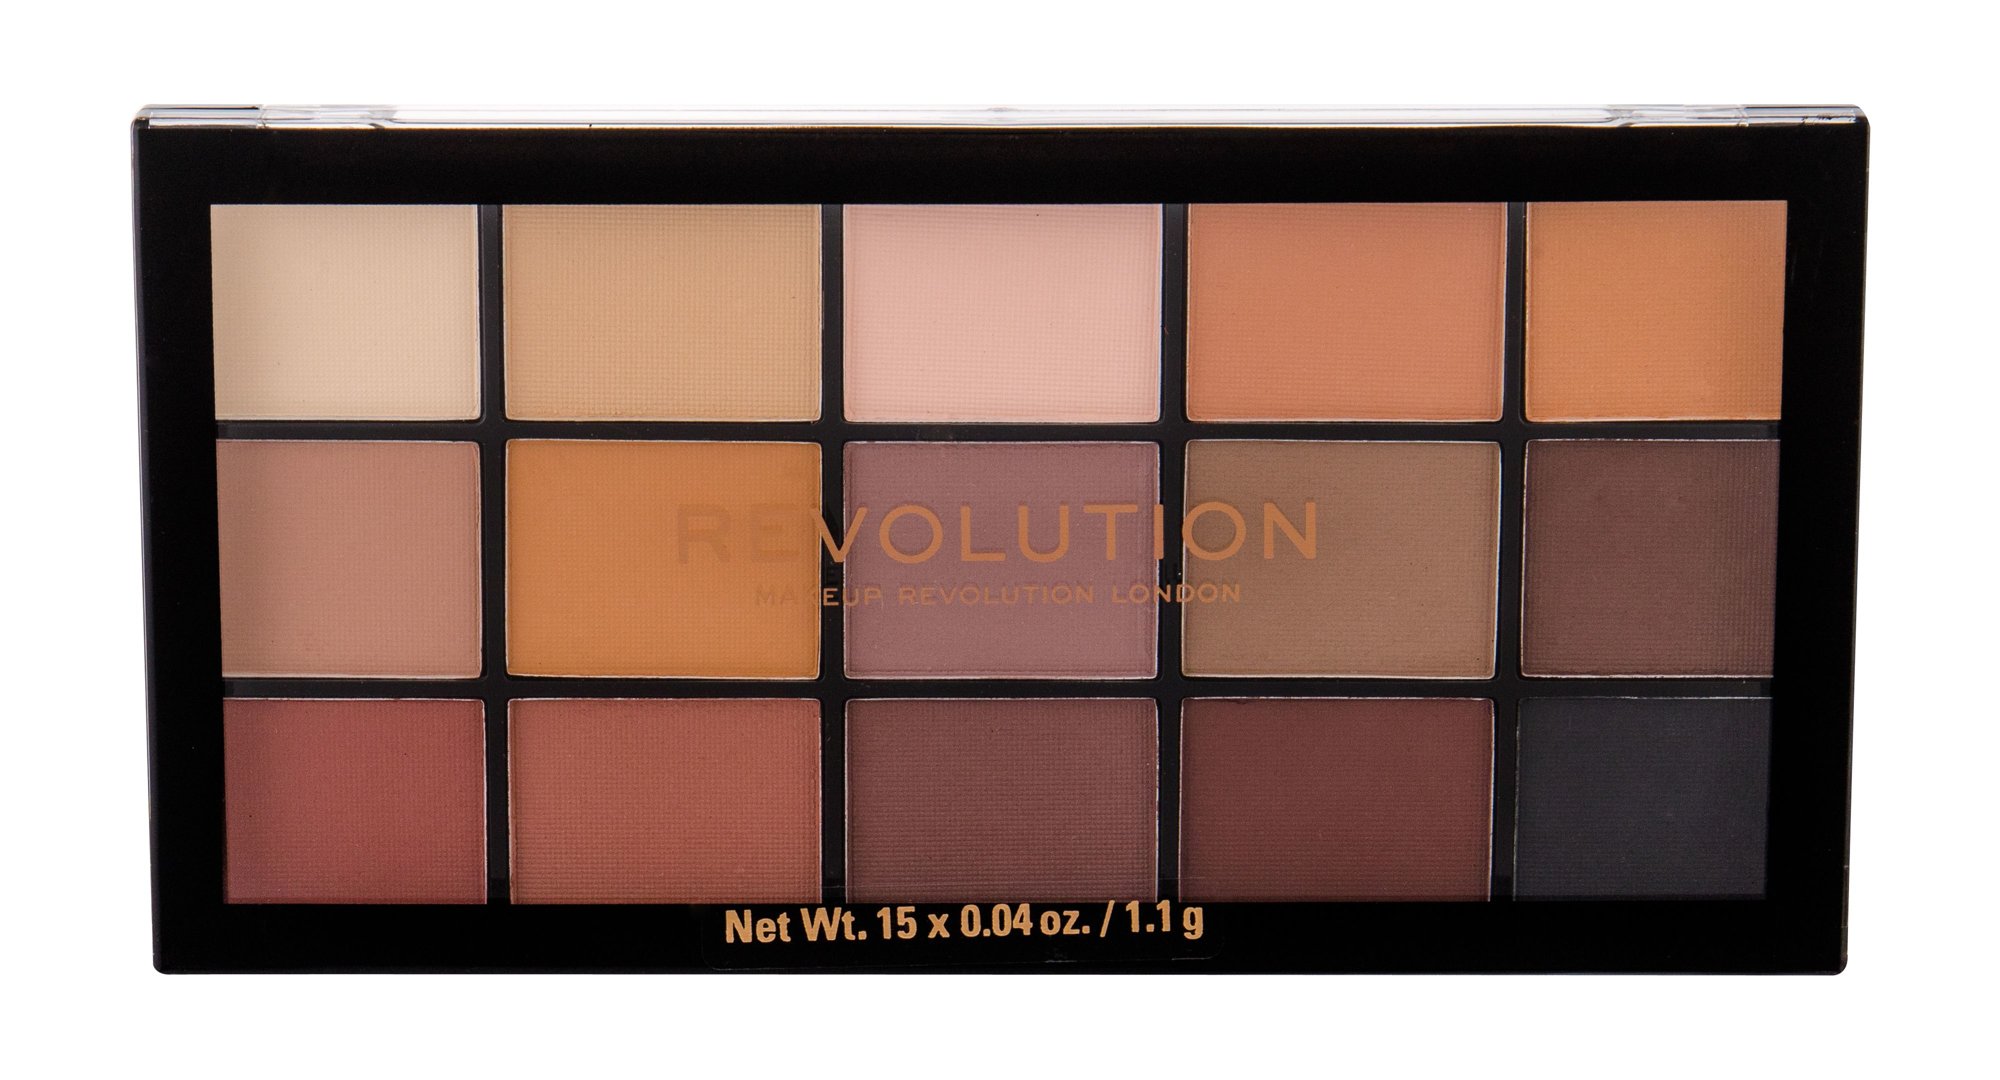 Makeup Revolution London Re-loaded 16,5g šešėliai